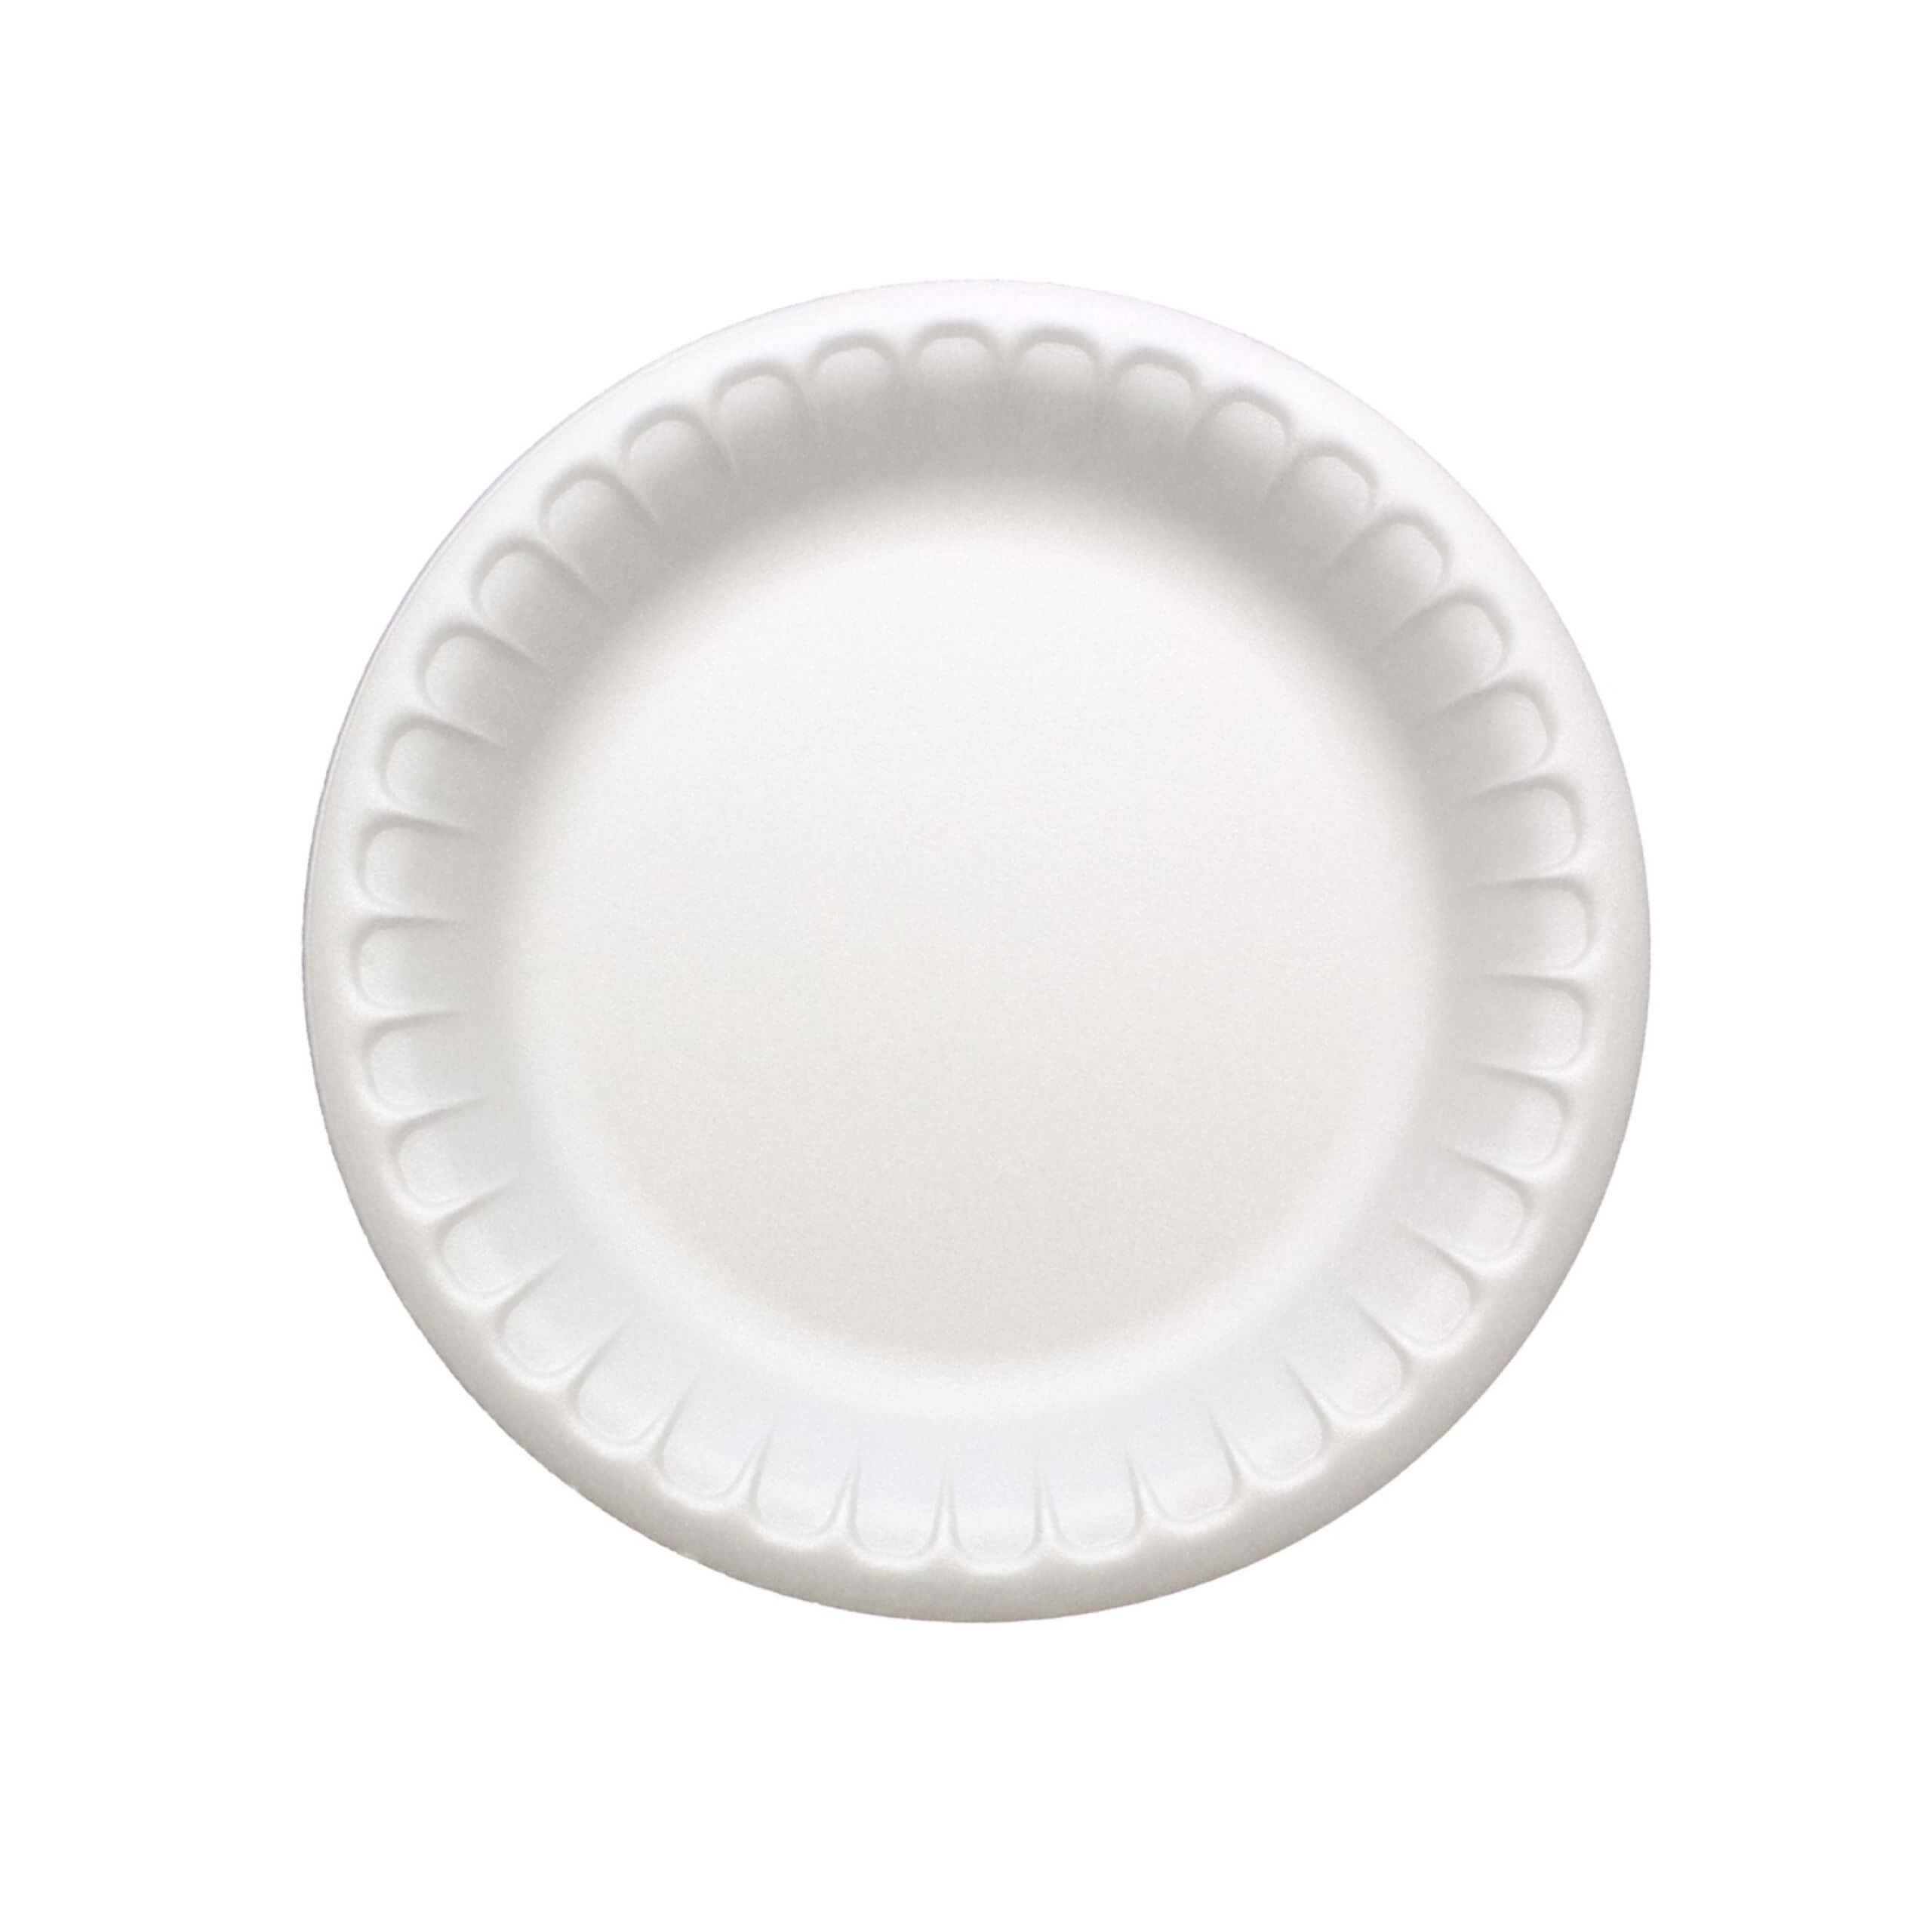 An image of a singular Polystyrene Foam Plate.